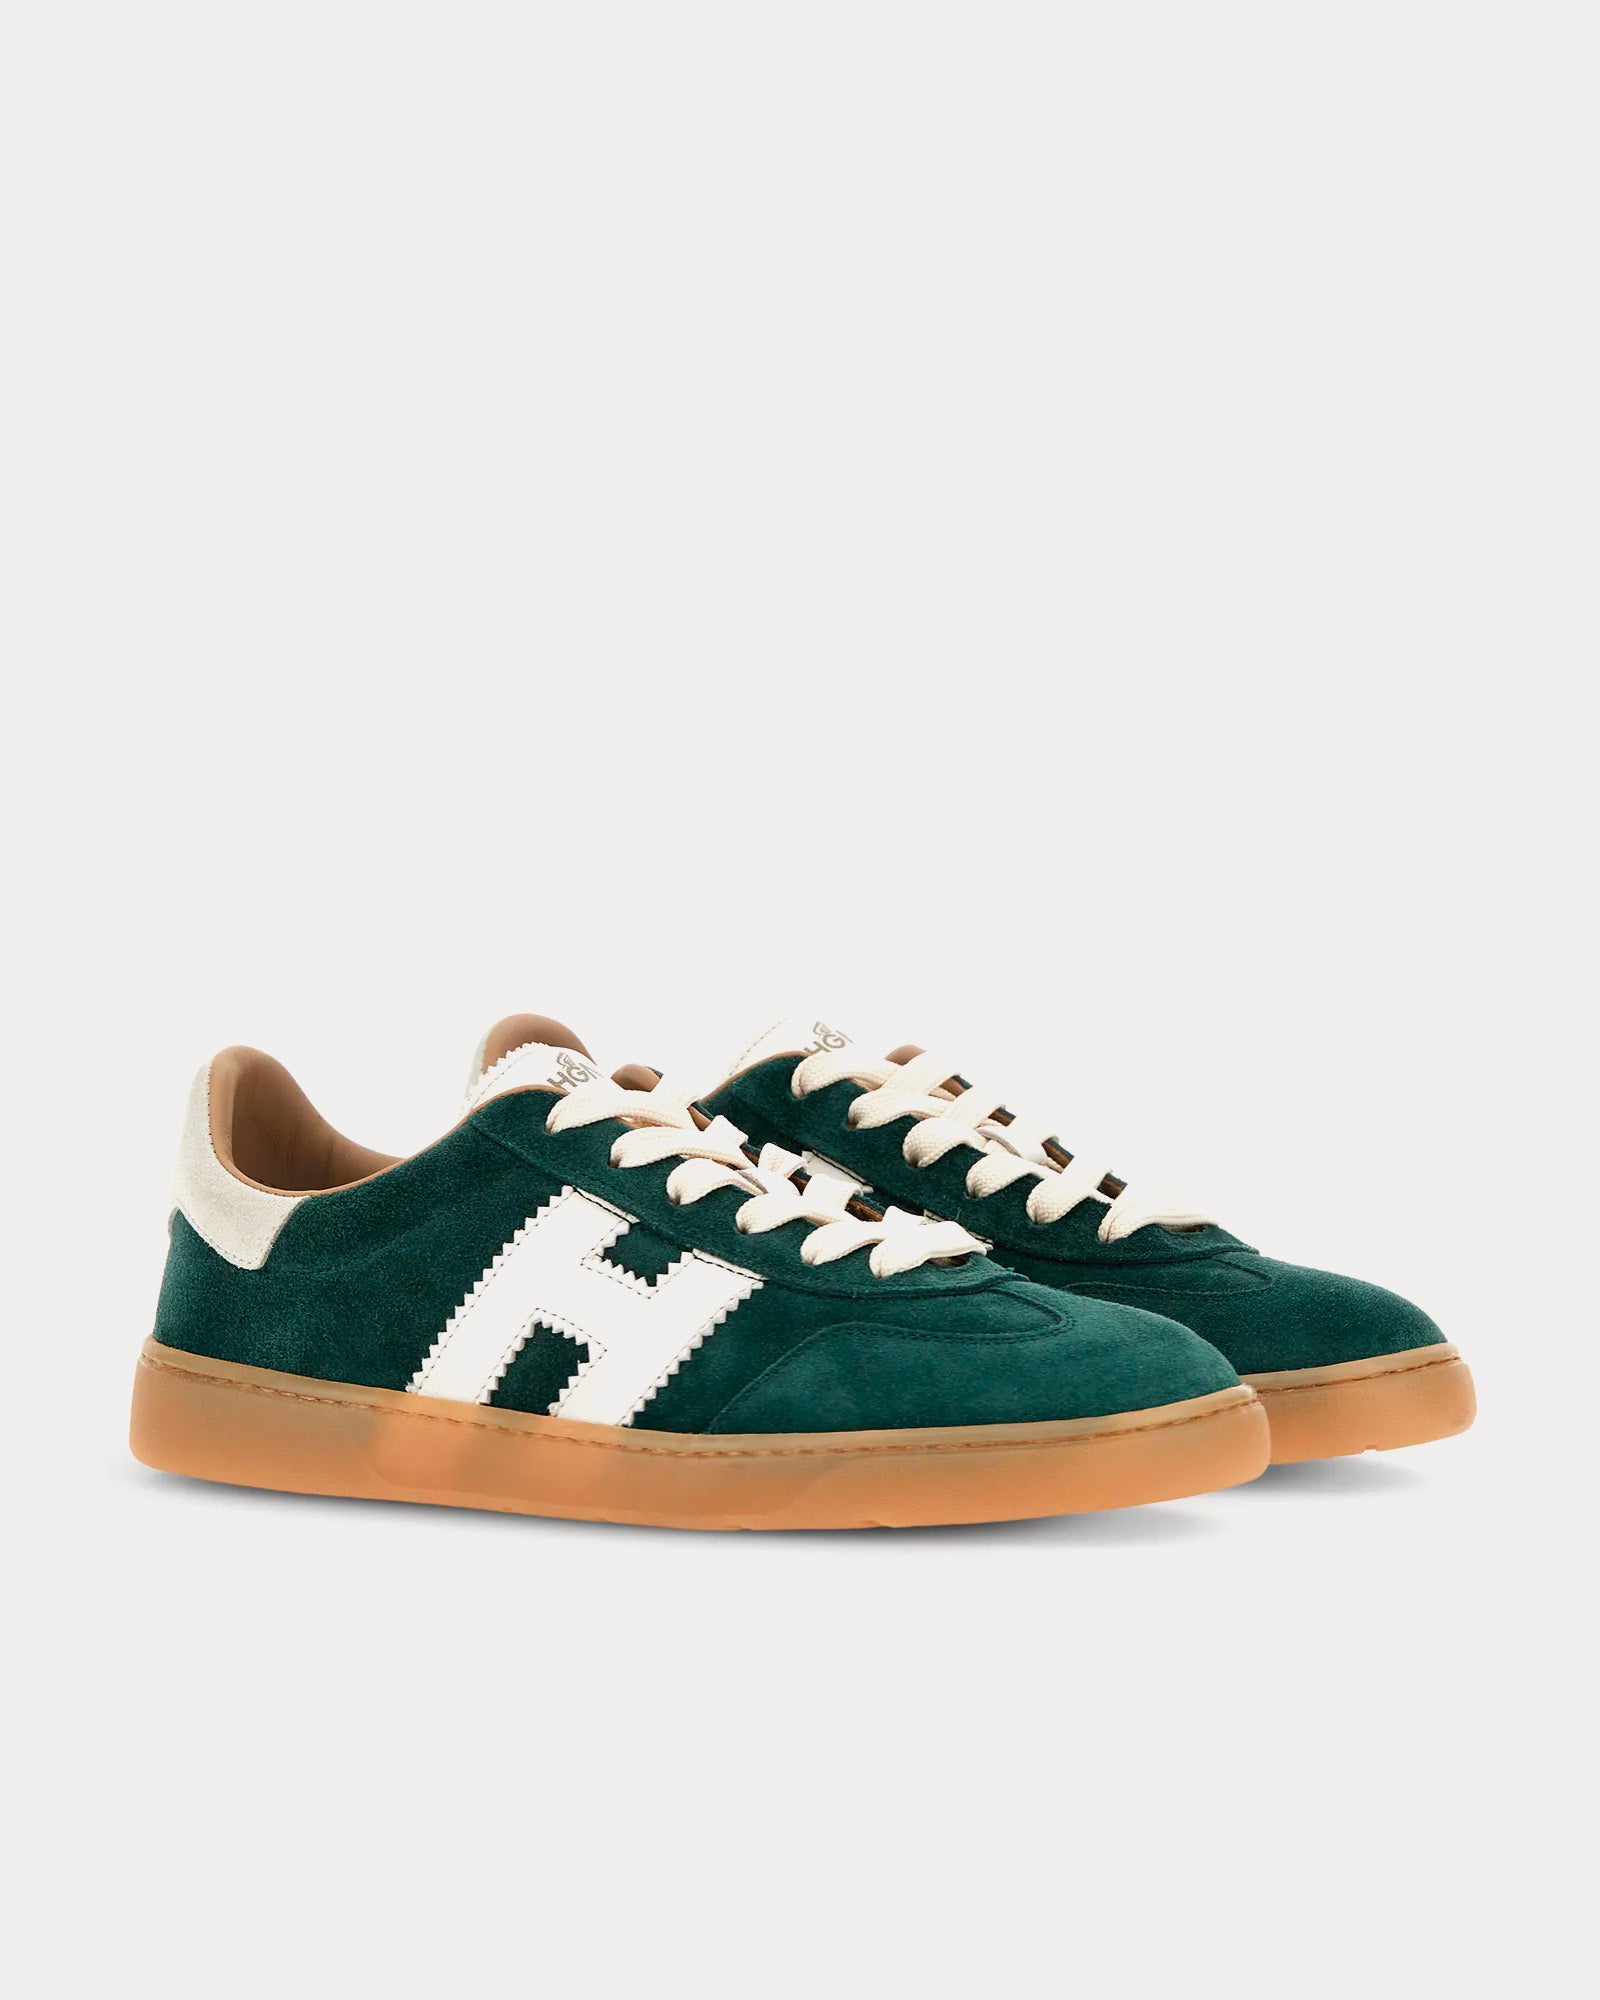 Hogan - Cool Suede Green Low Top Sneakers